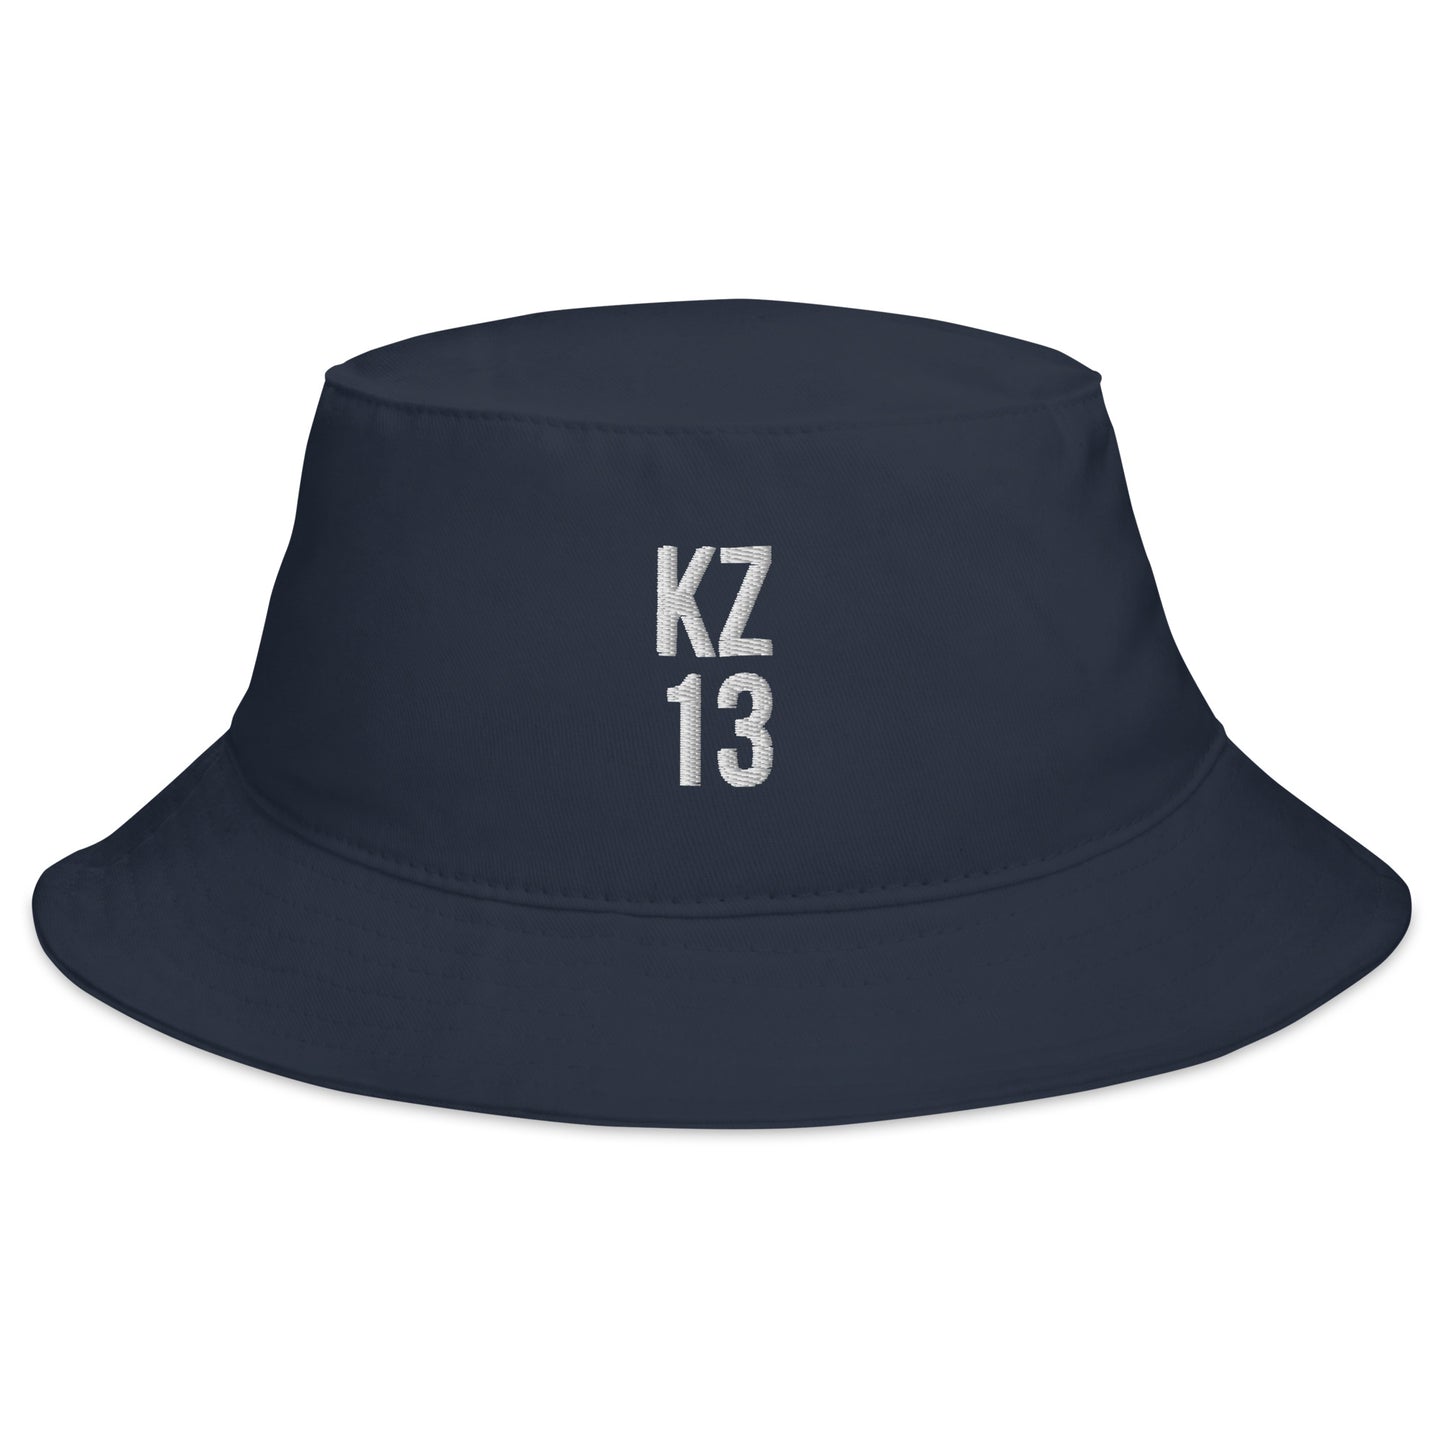 KZ 13 Bucket Hat